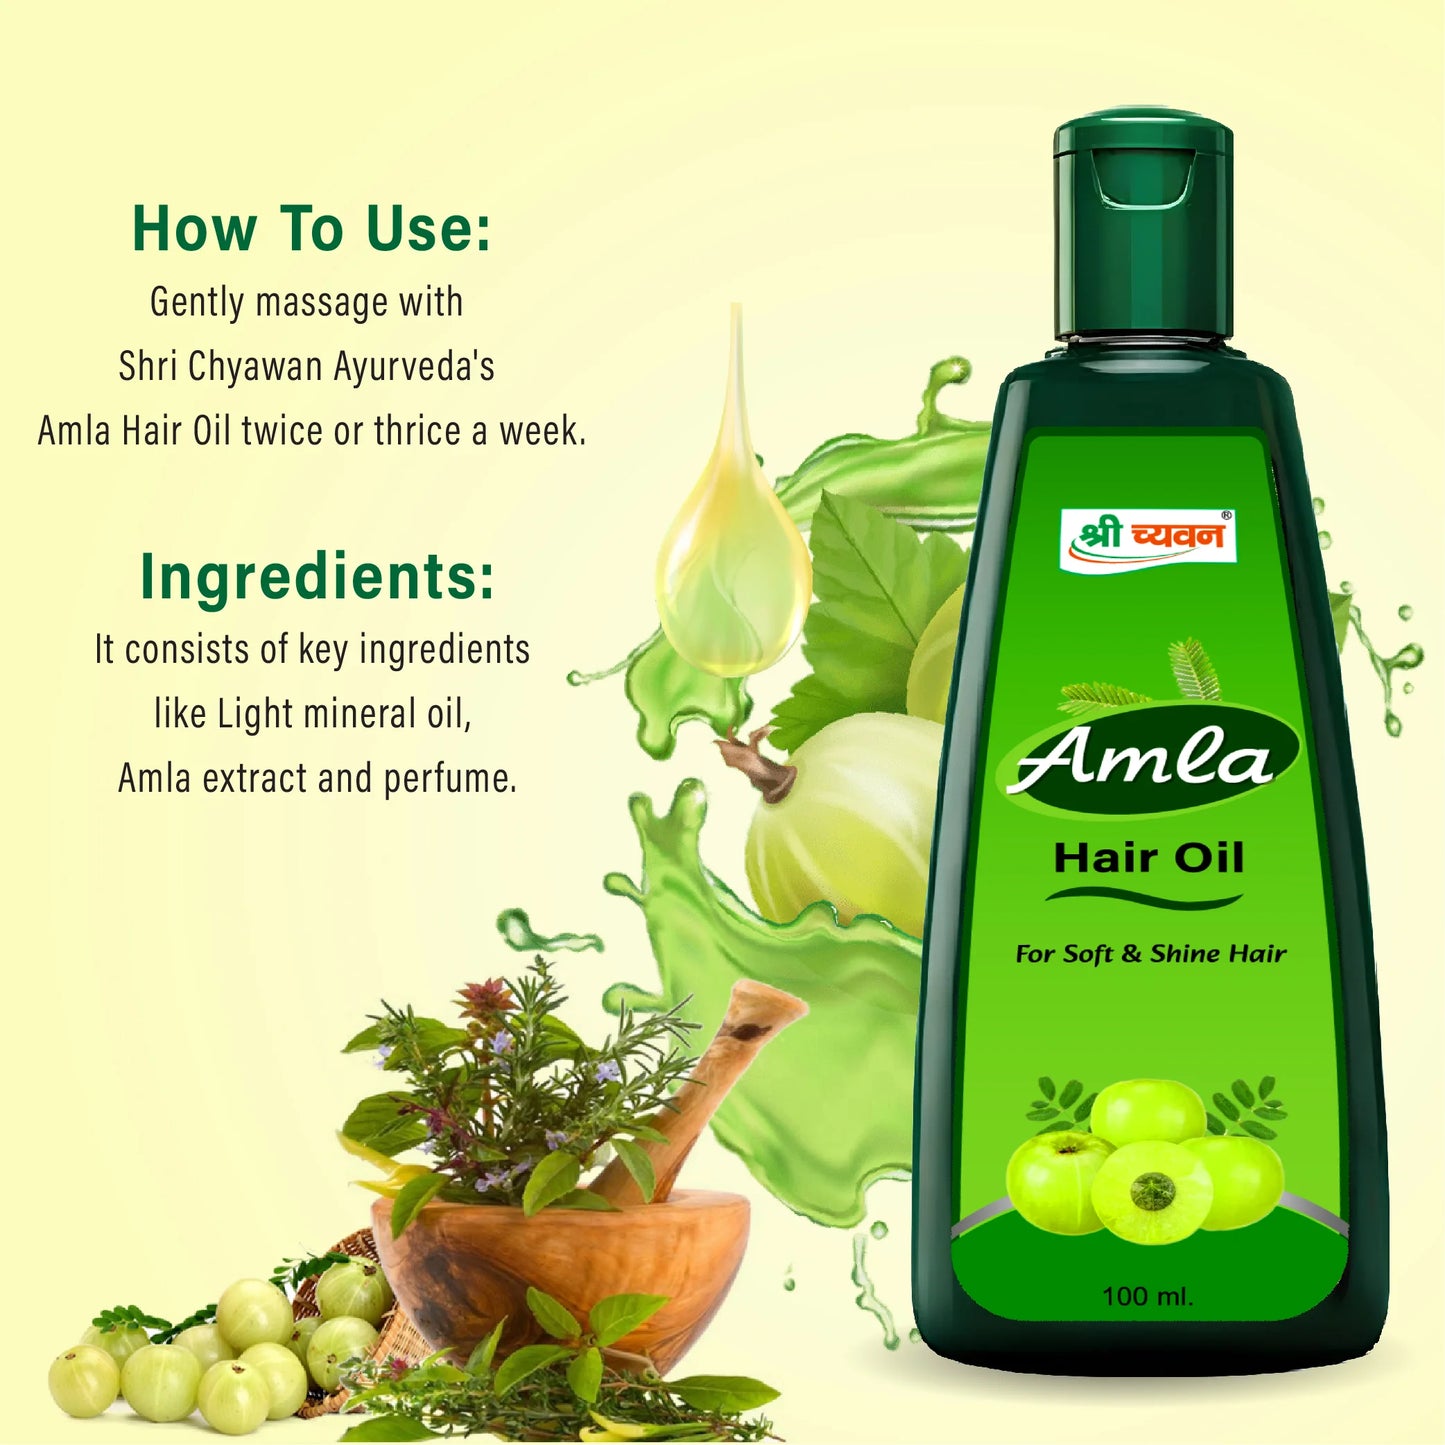 Amla Hair Oil - Benefits, Ingredients, Price